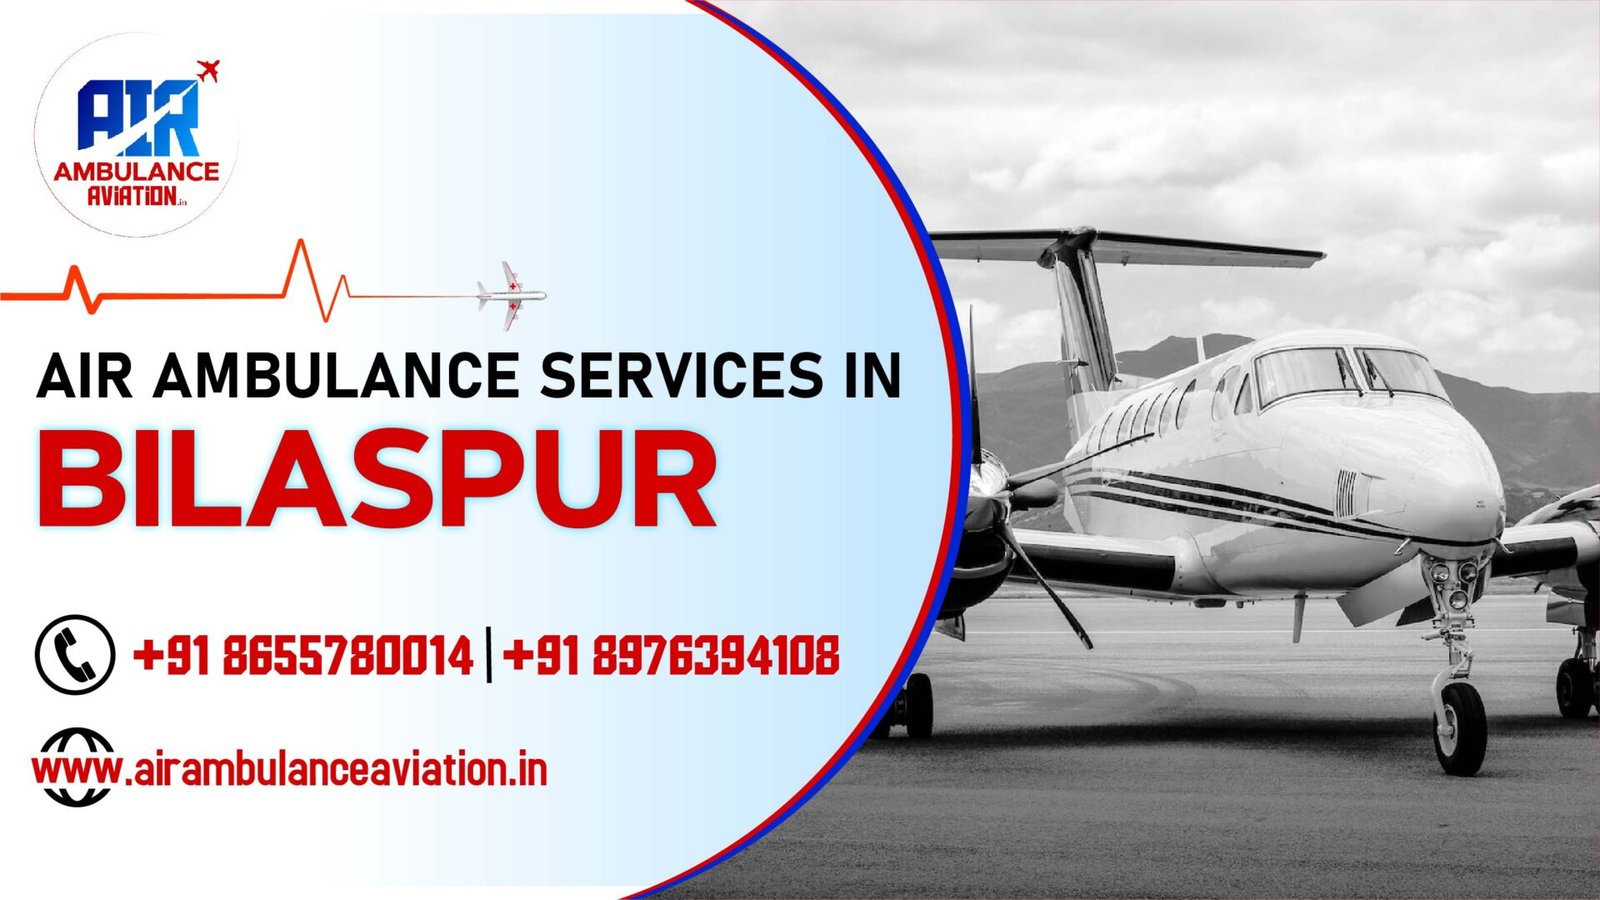 Air Ambulance Services in Bilaspur